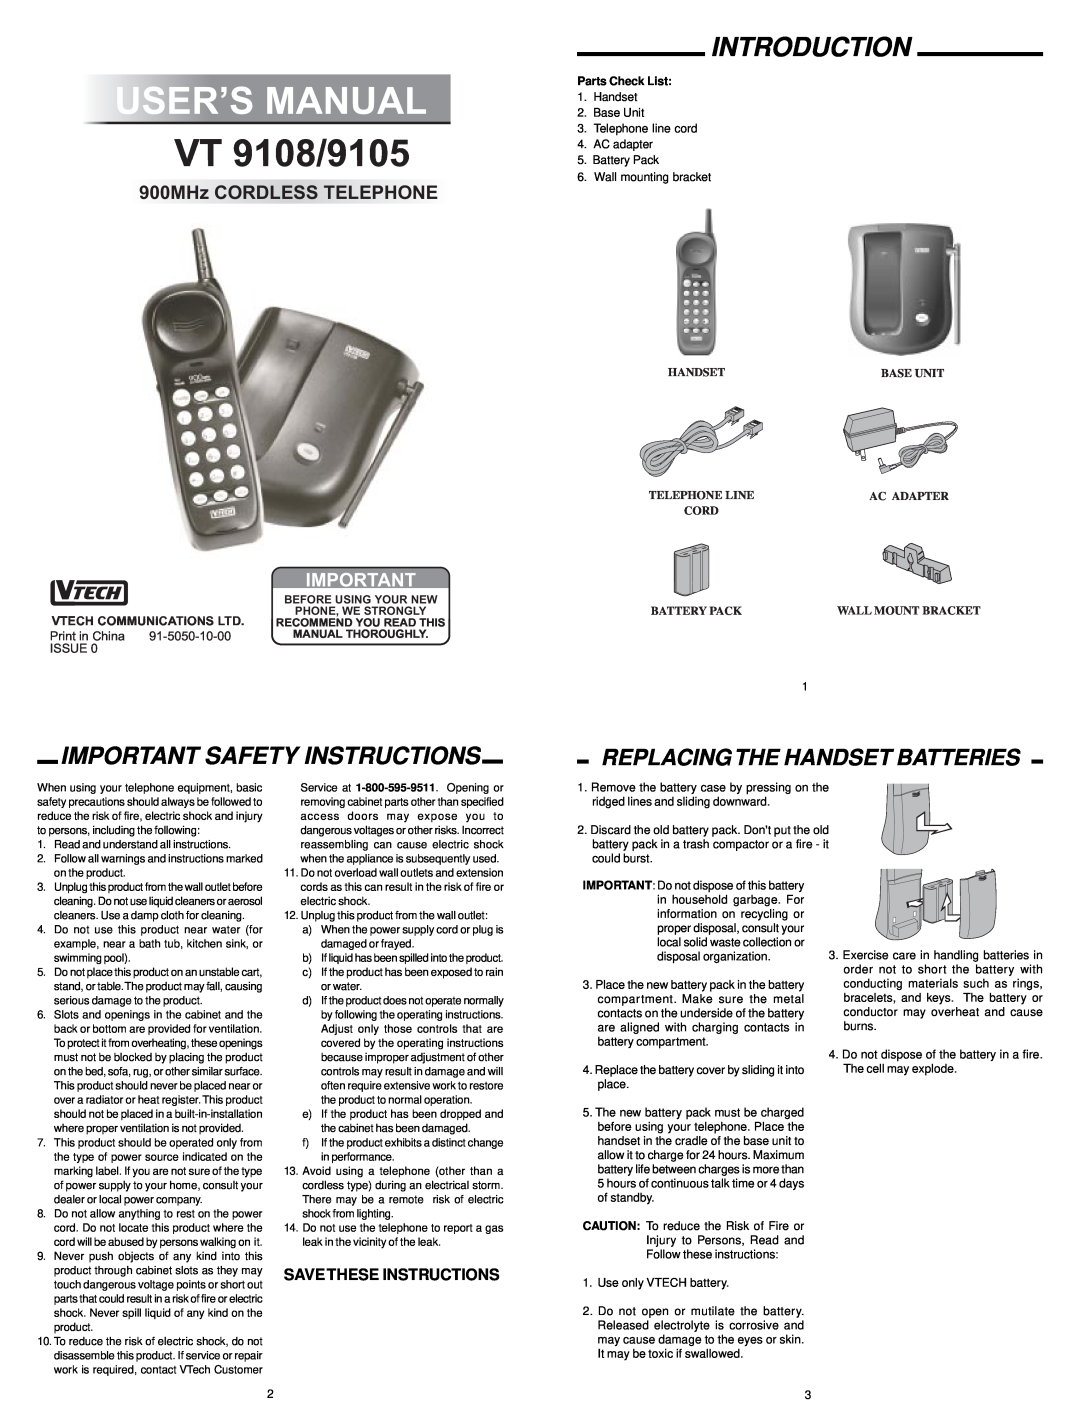 VTech important safety instructions Important Safety Instructions, User’S Manual, VT 9108/9105, Vtech, Introduction 